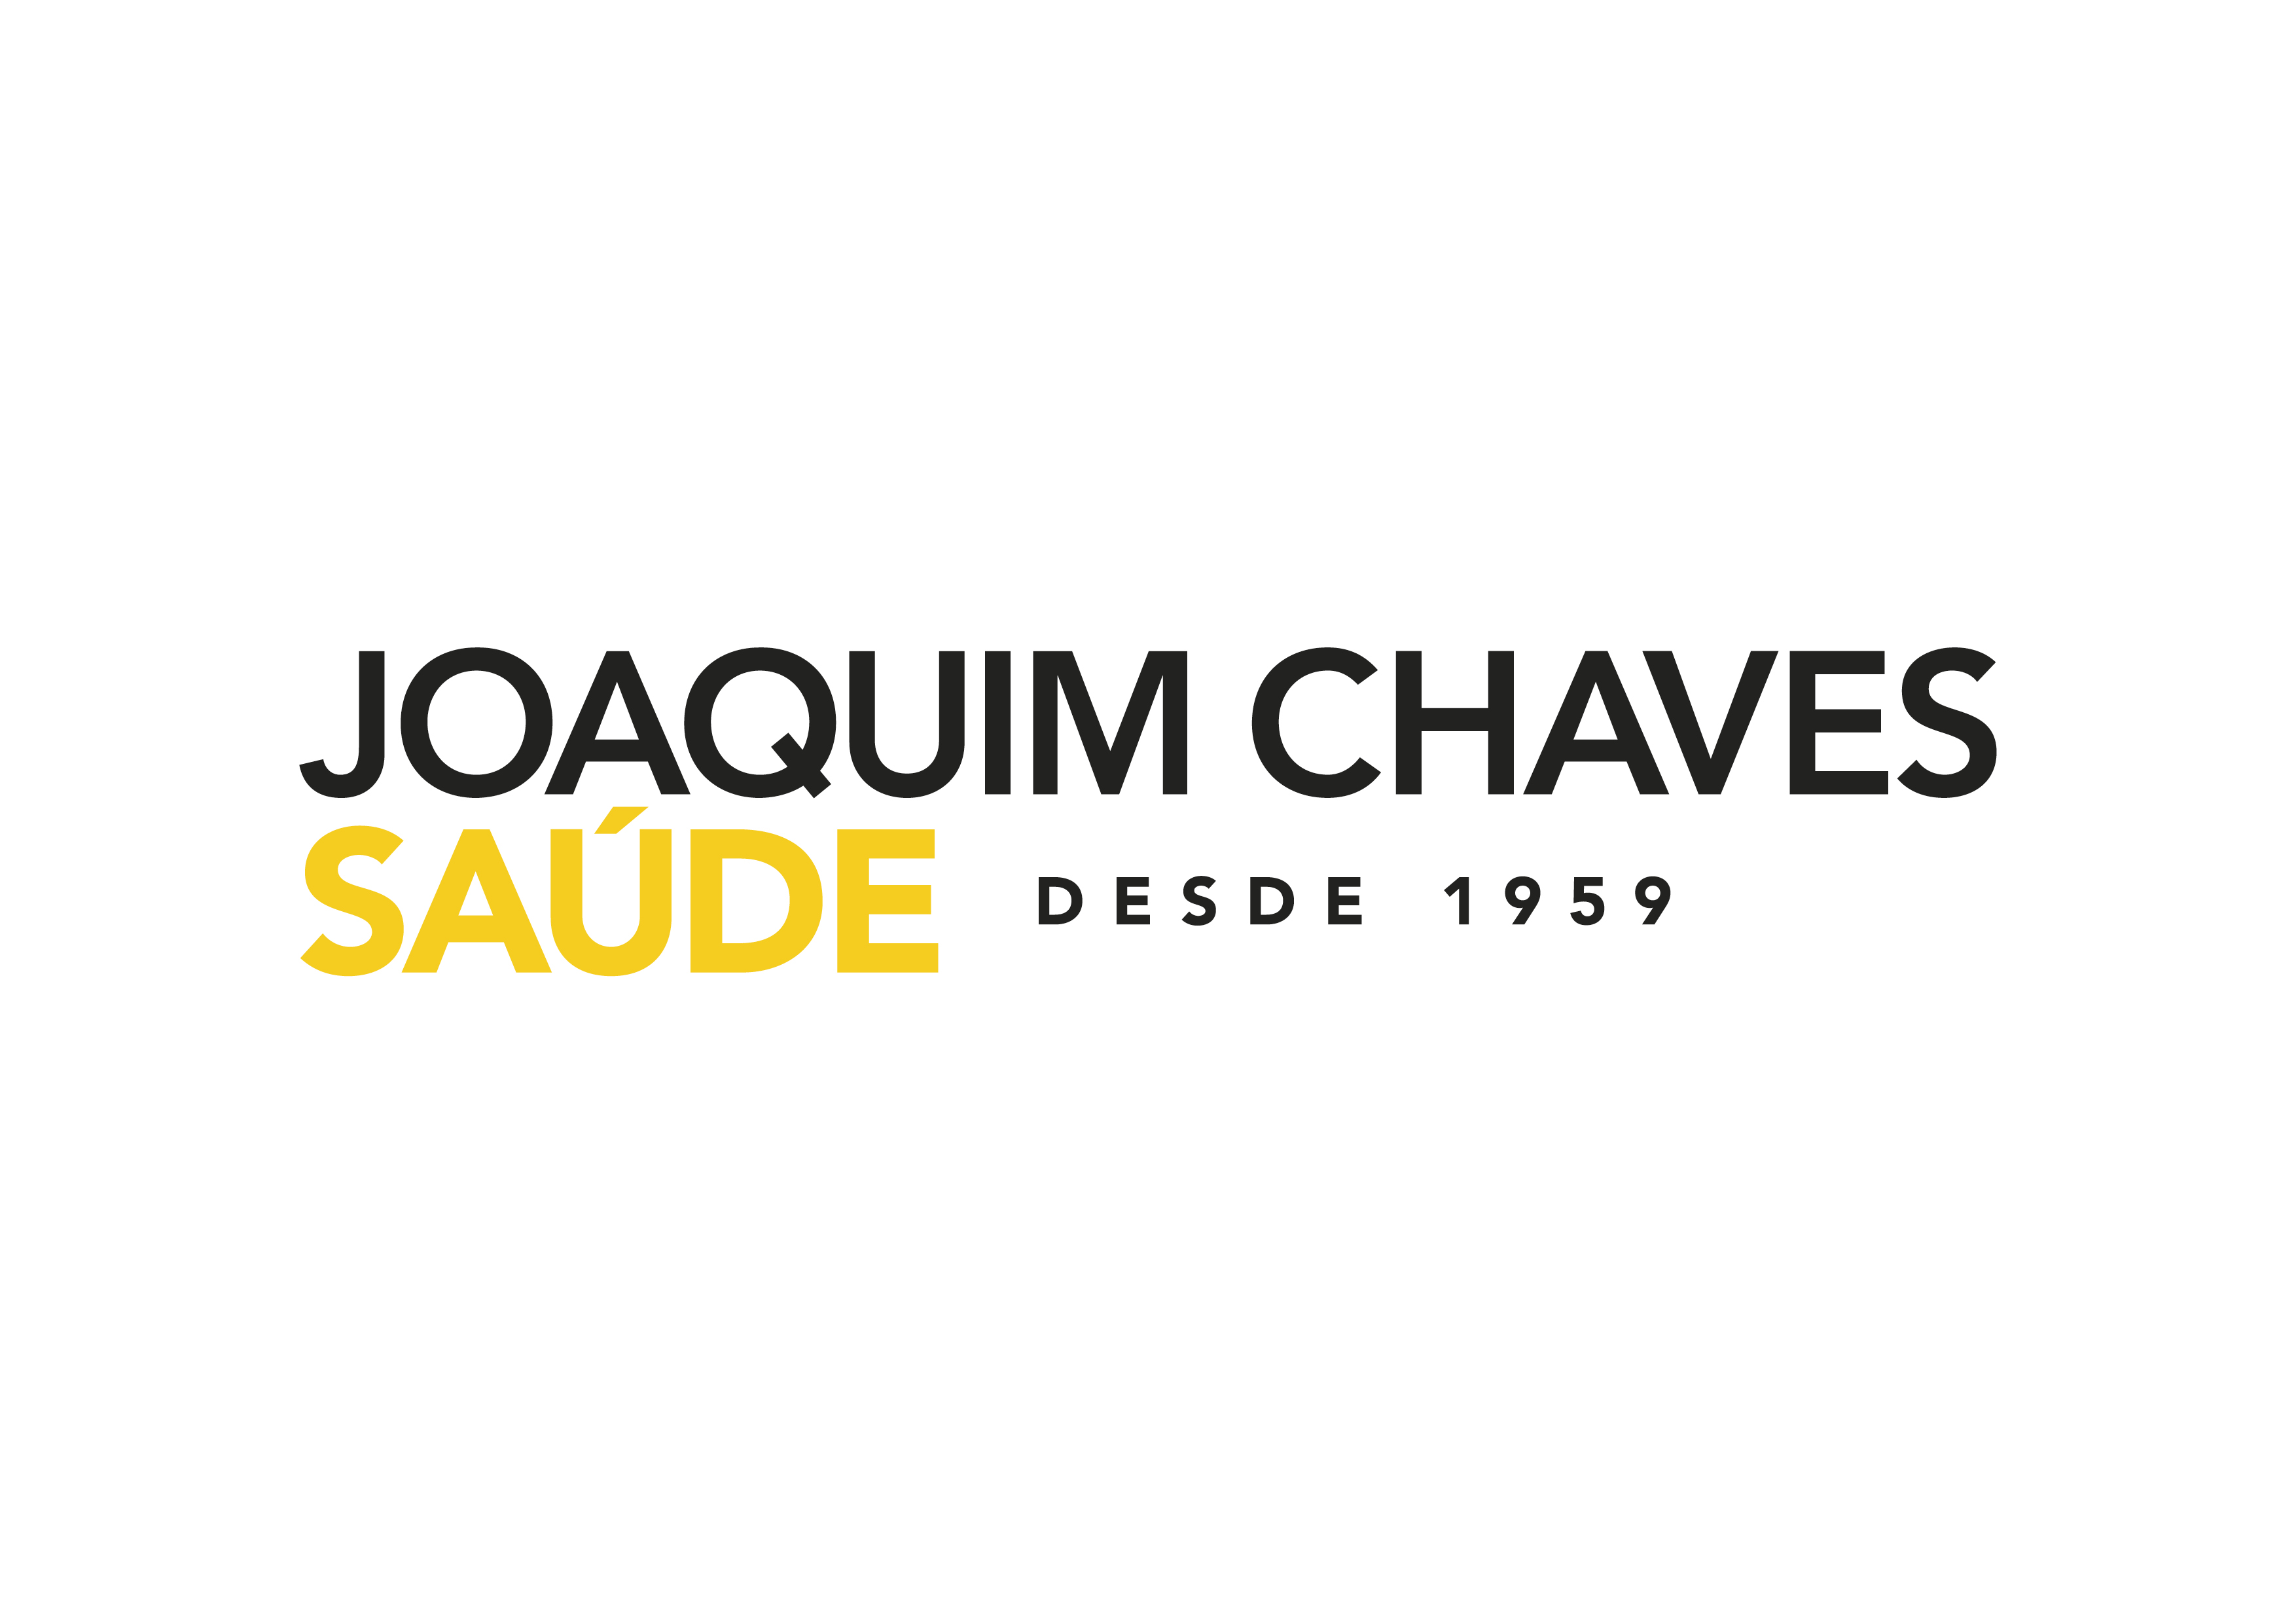 Joaquim Chaves